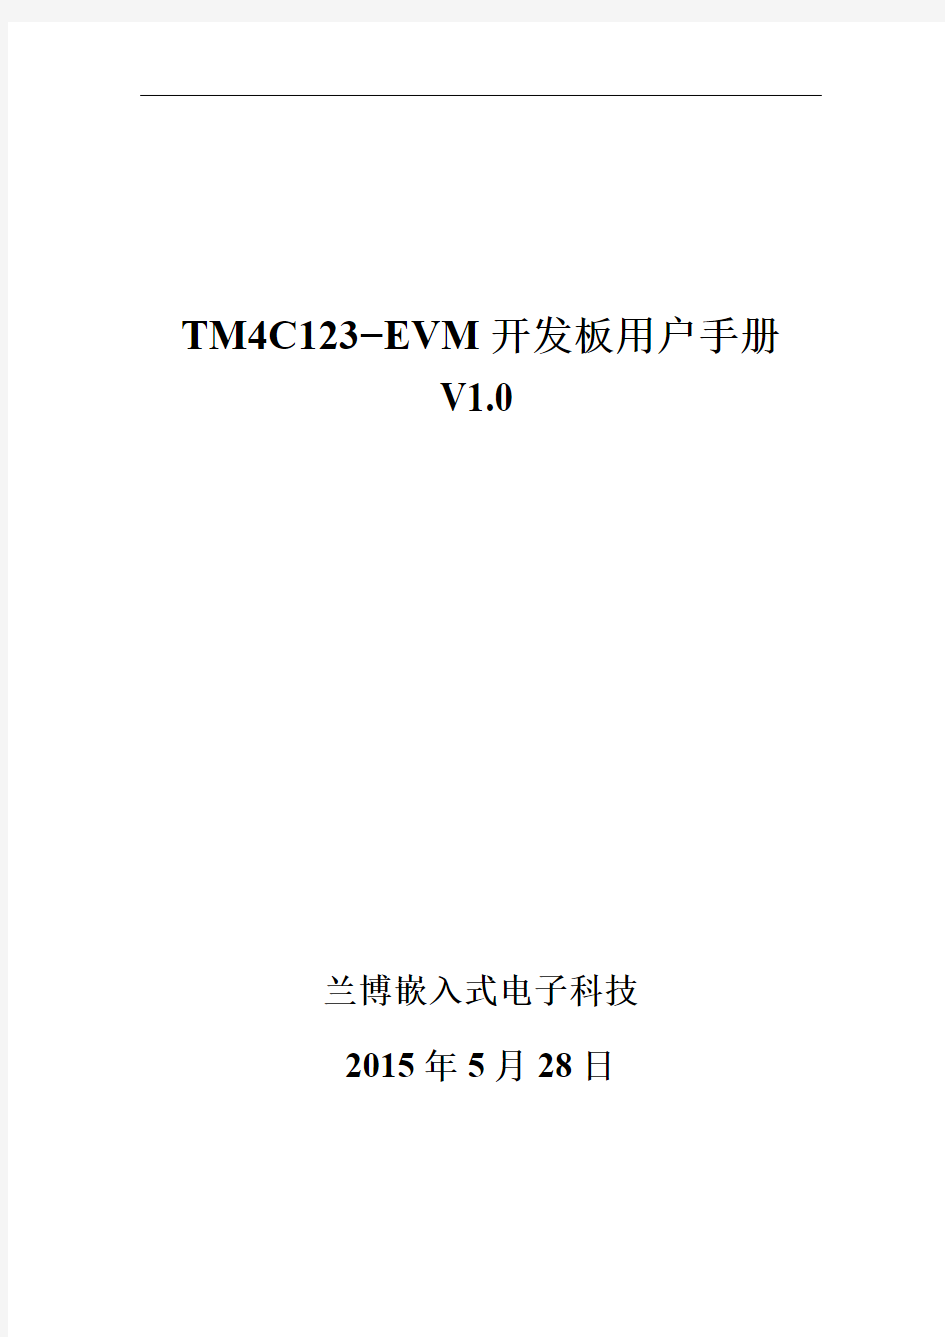 TM4C123-EVM开发板用户手册V1.0(MDK5部分)